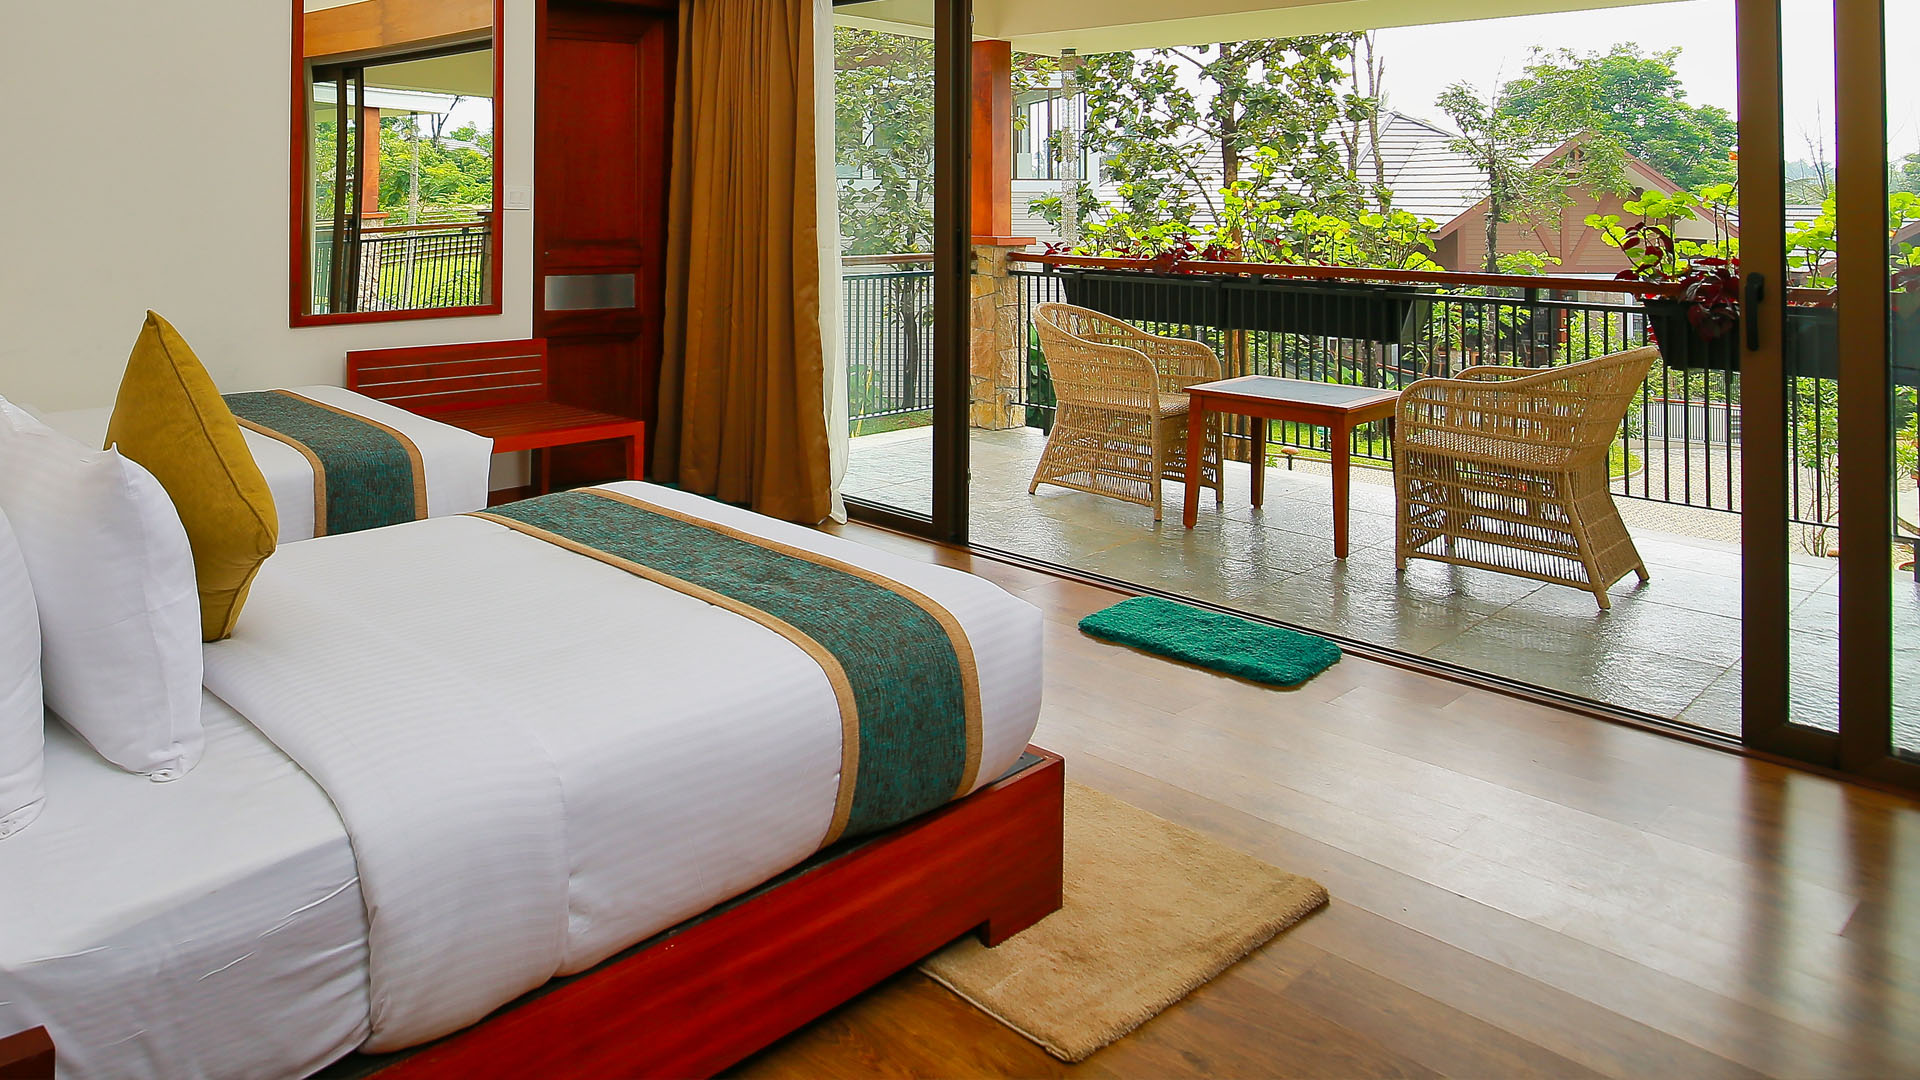 Morickap Resort: A Luxurious Honeymoon Retreat with Private Pools in Wayanad